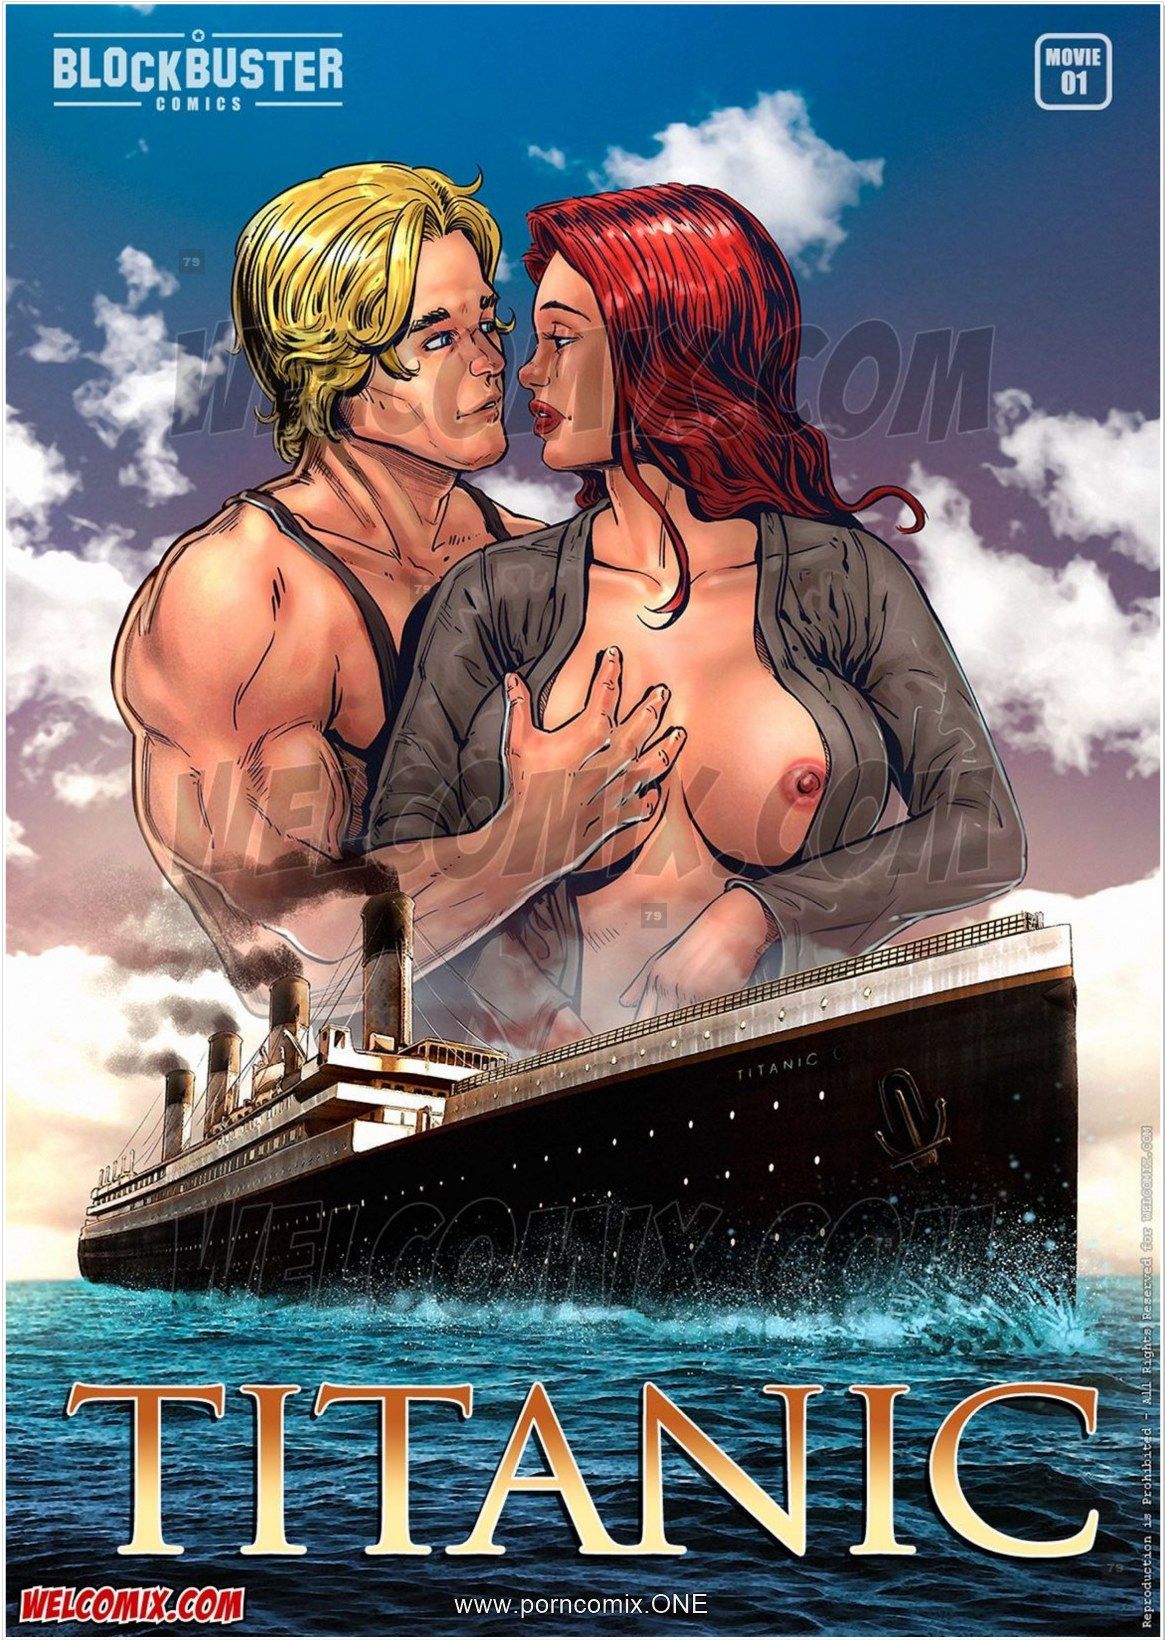 Titanic - Welcomix Blockbuster page 1